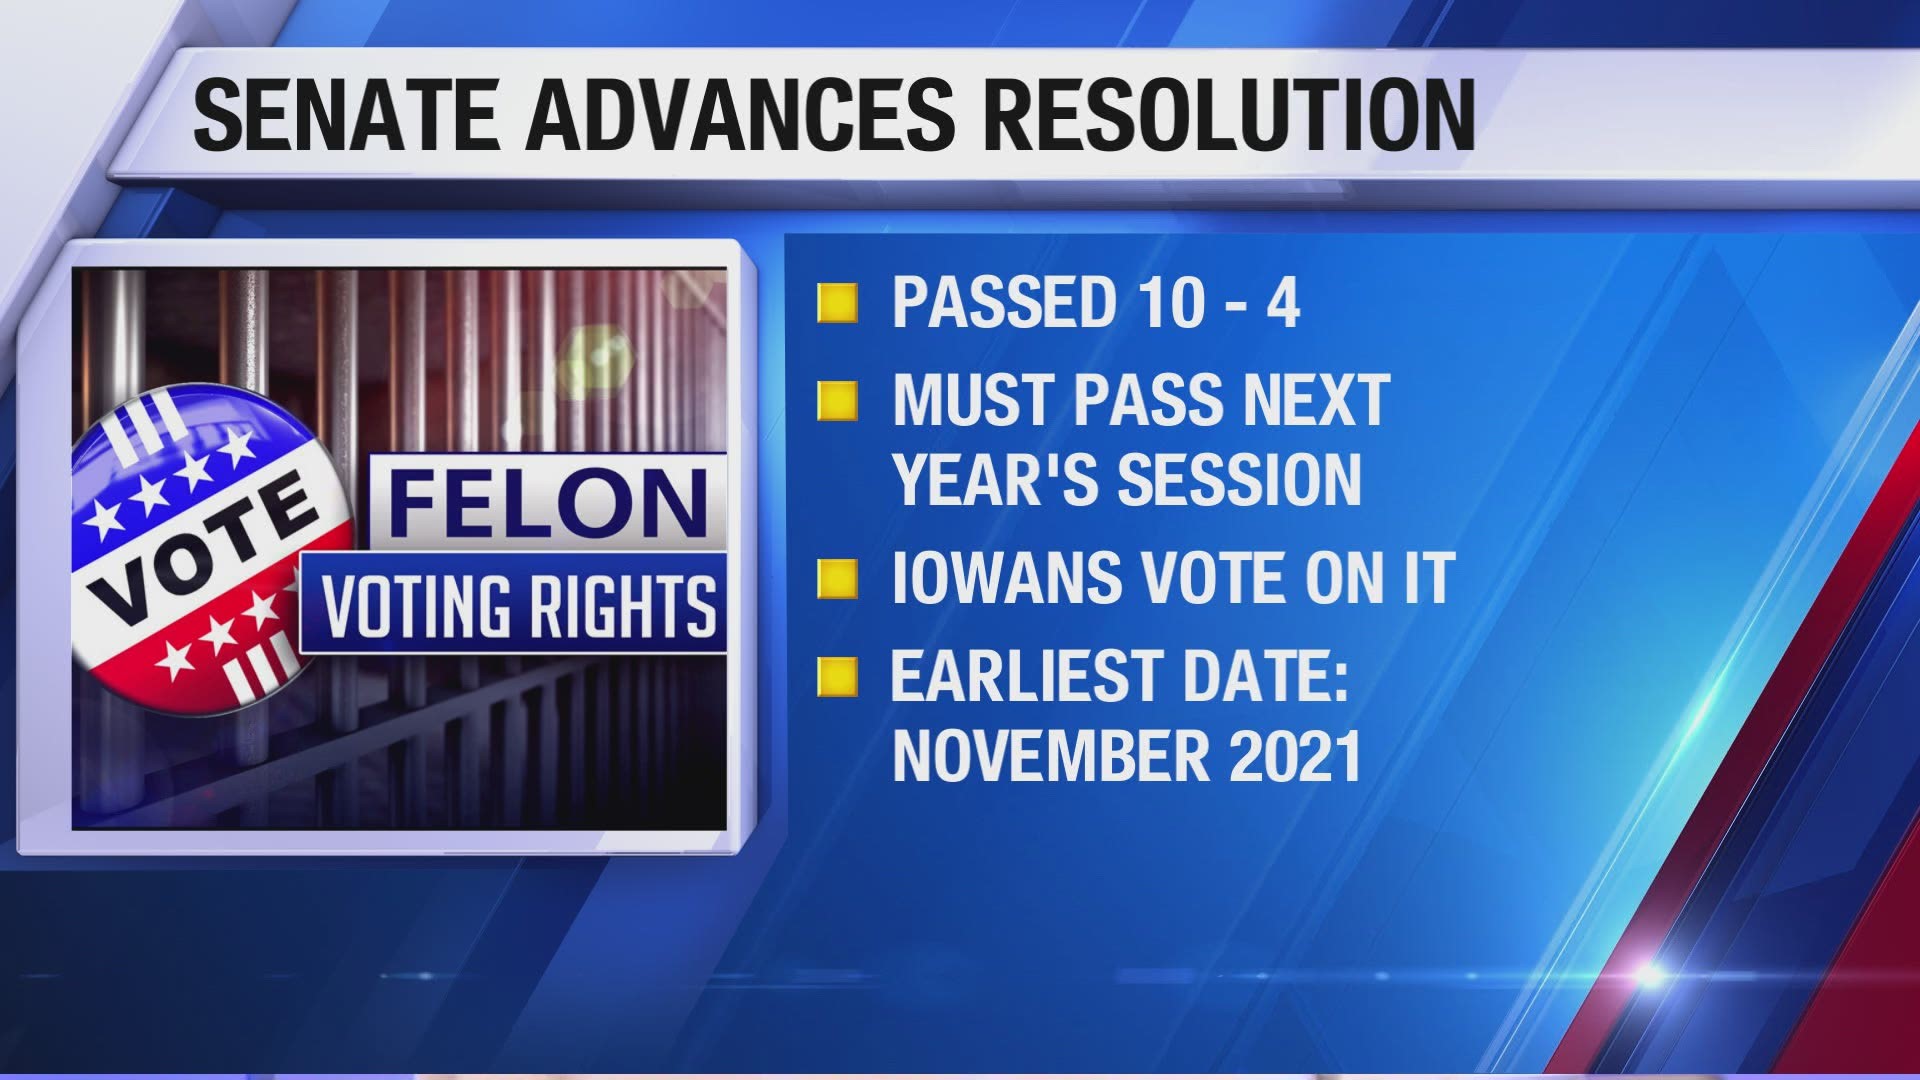 Senate committee passes resolution regarding felon voting rights in Iowa